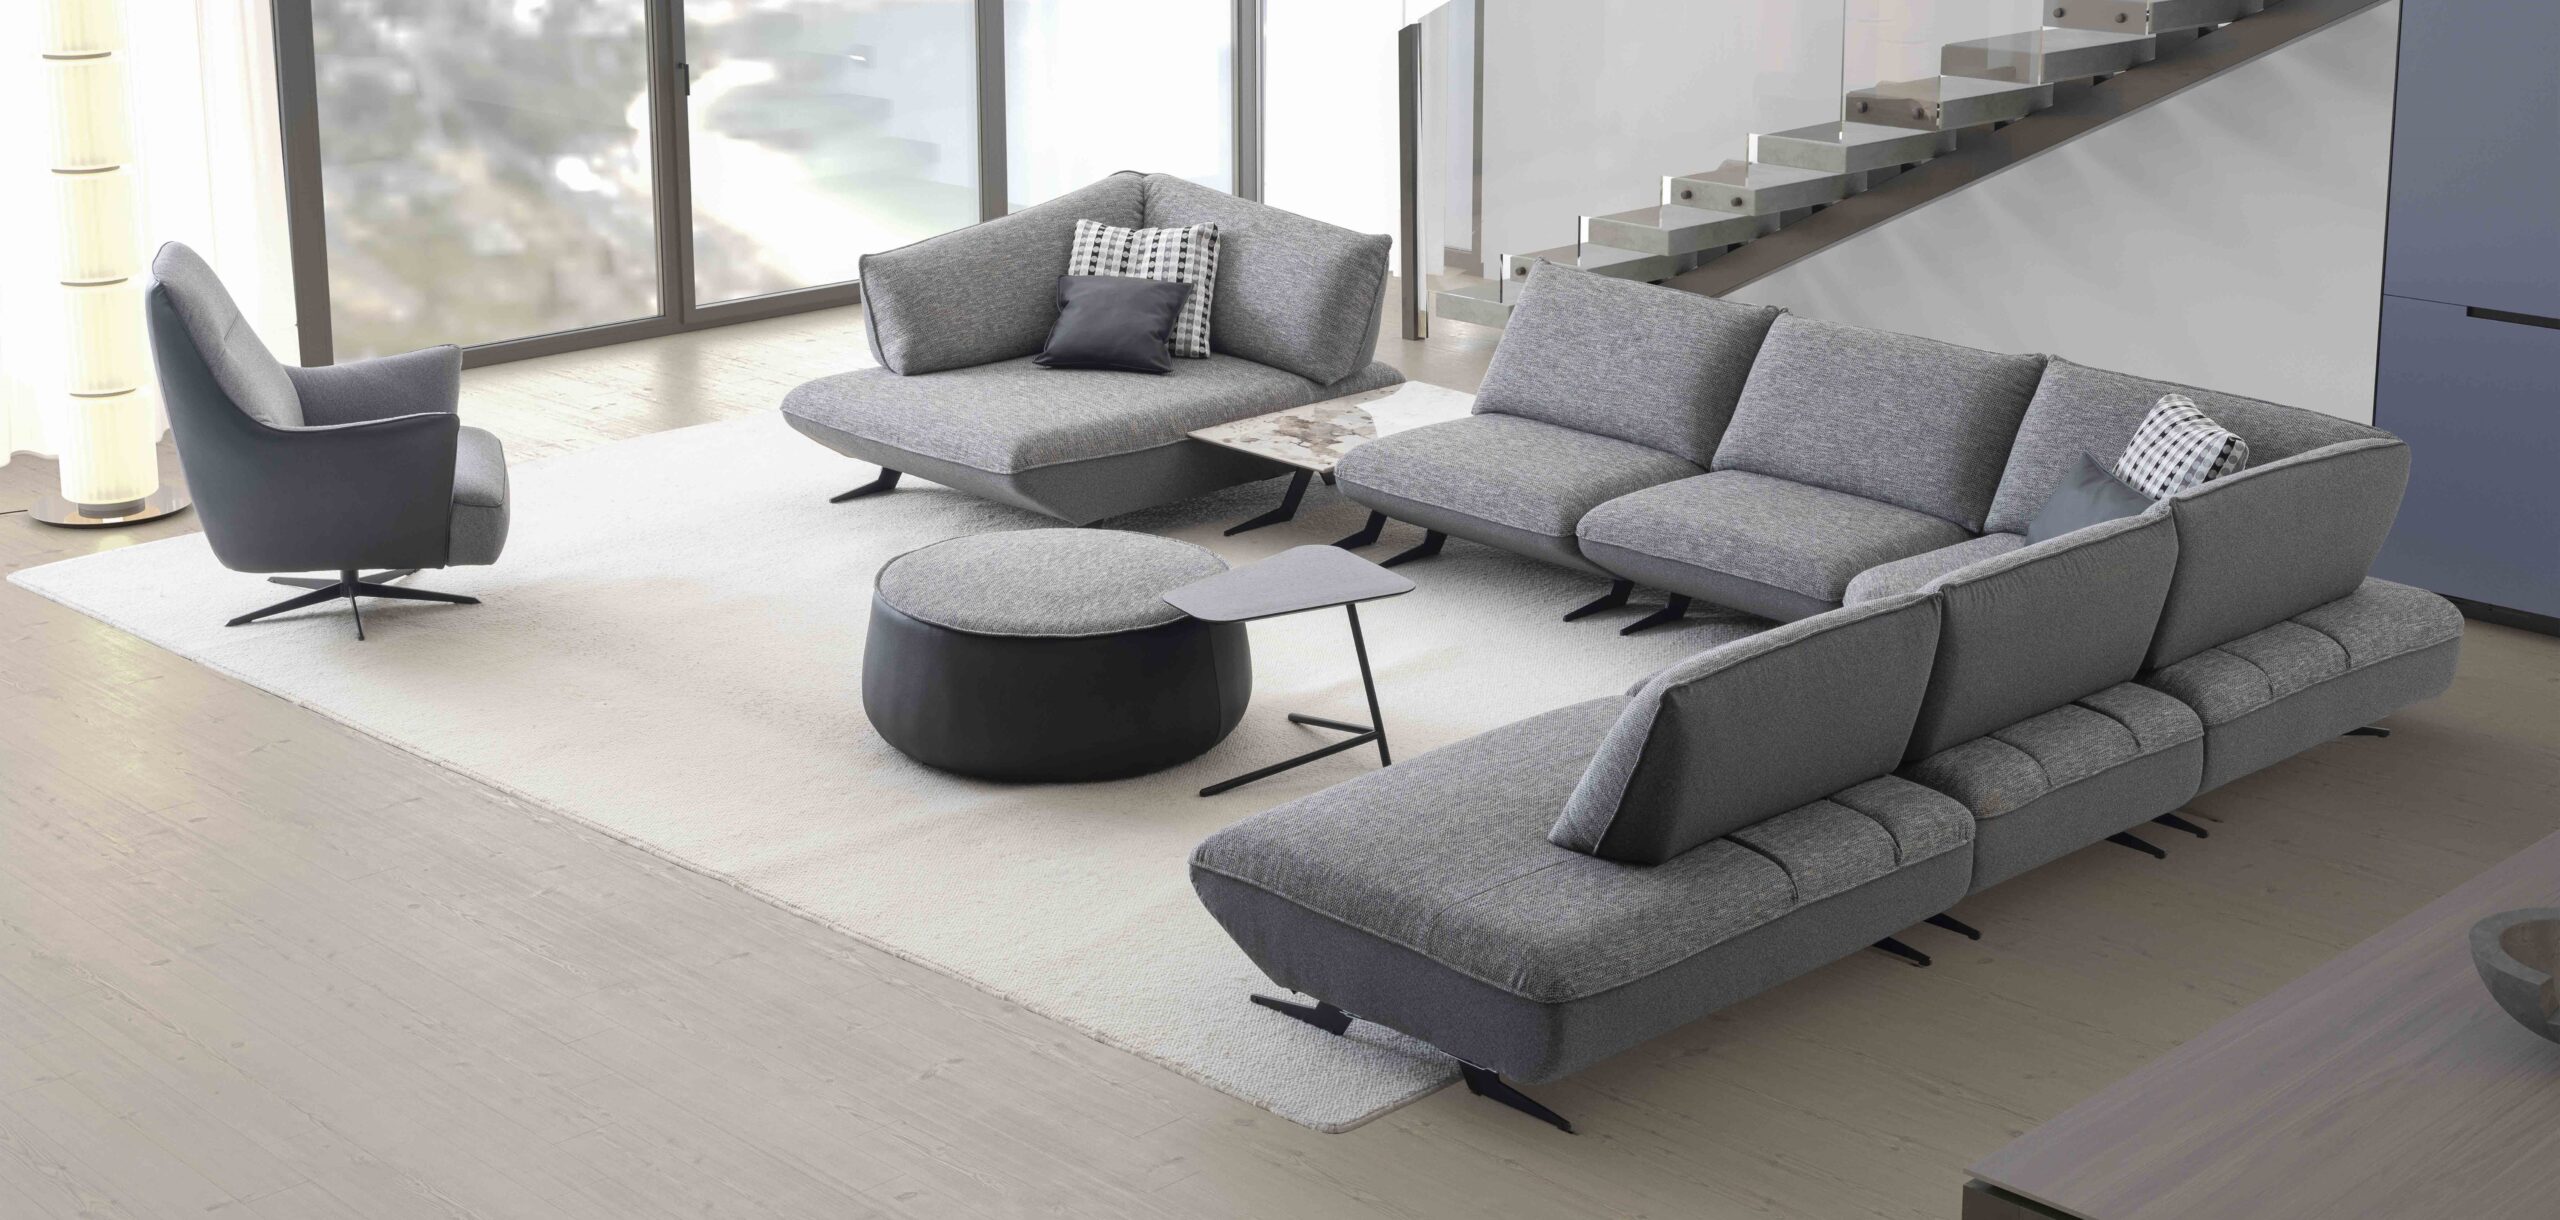 Symba-Hoeksalon-Design Sofa-Grijze sofa met strakke poten-meubelwinkel